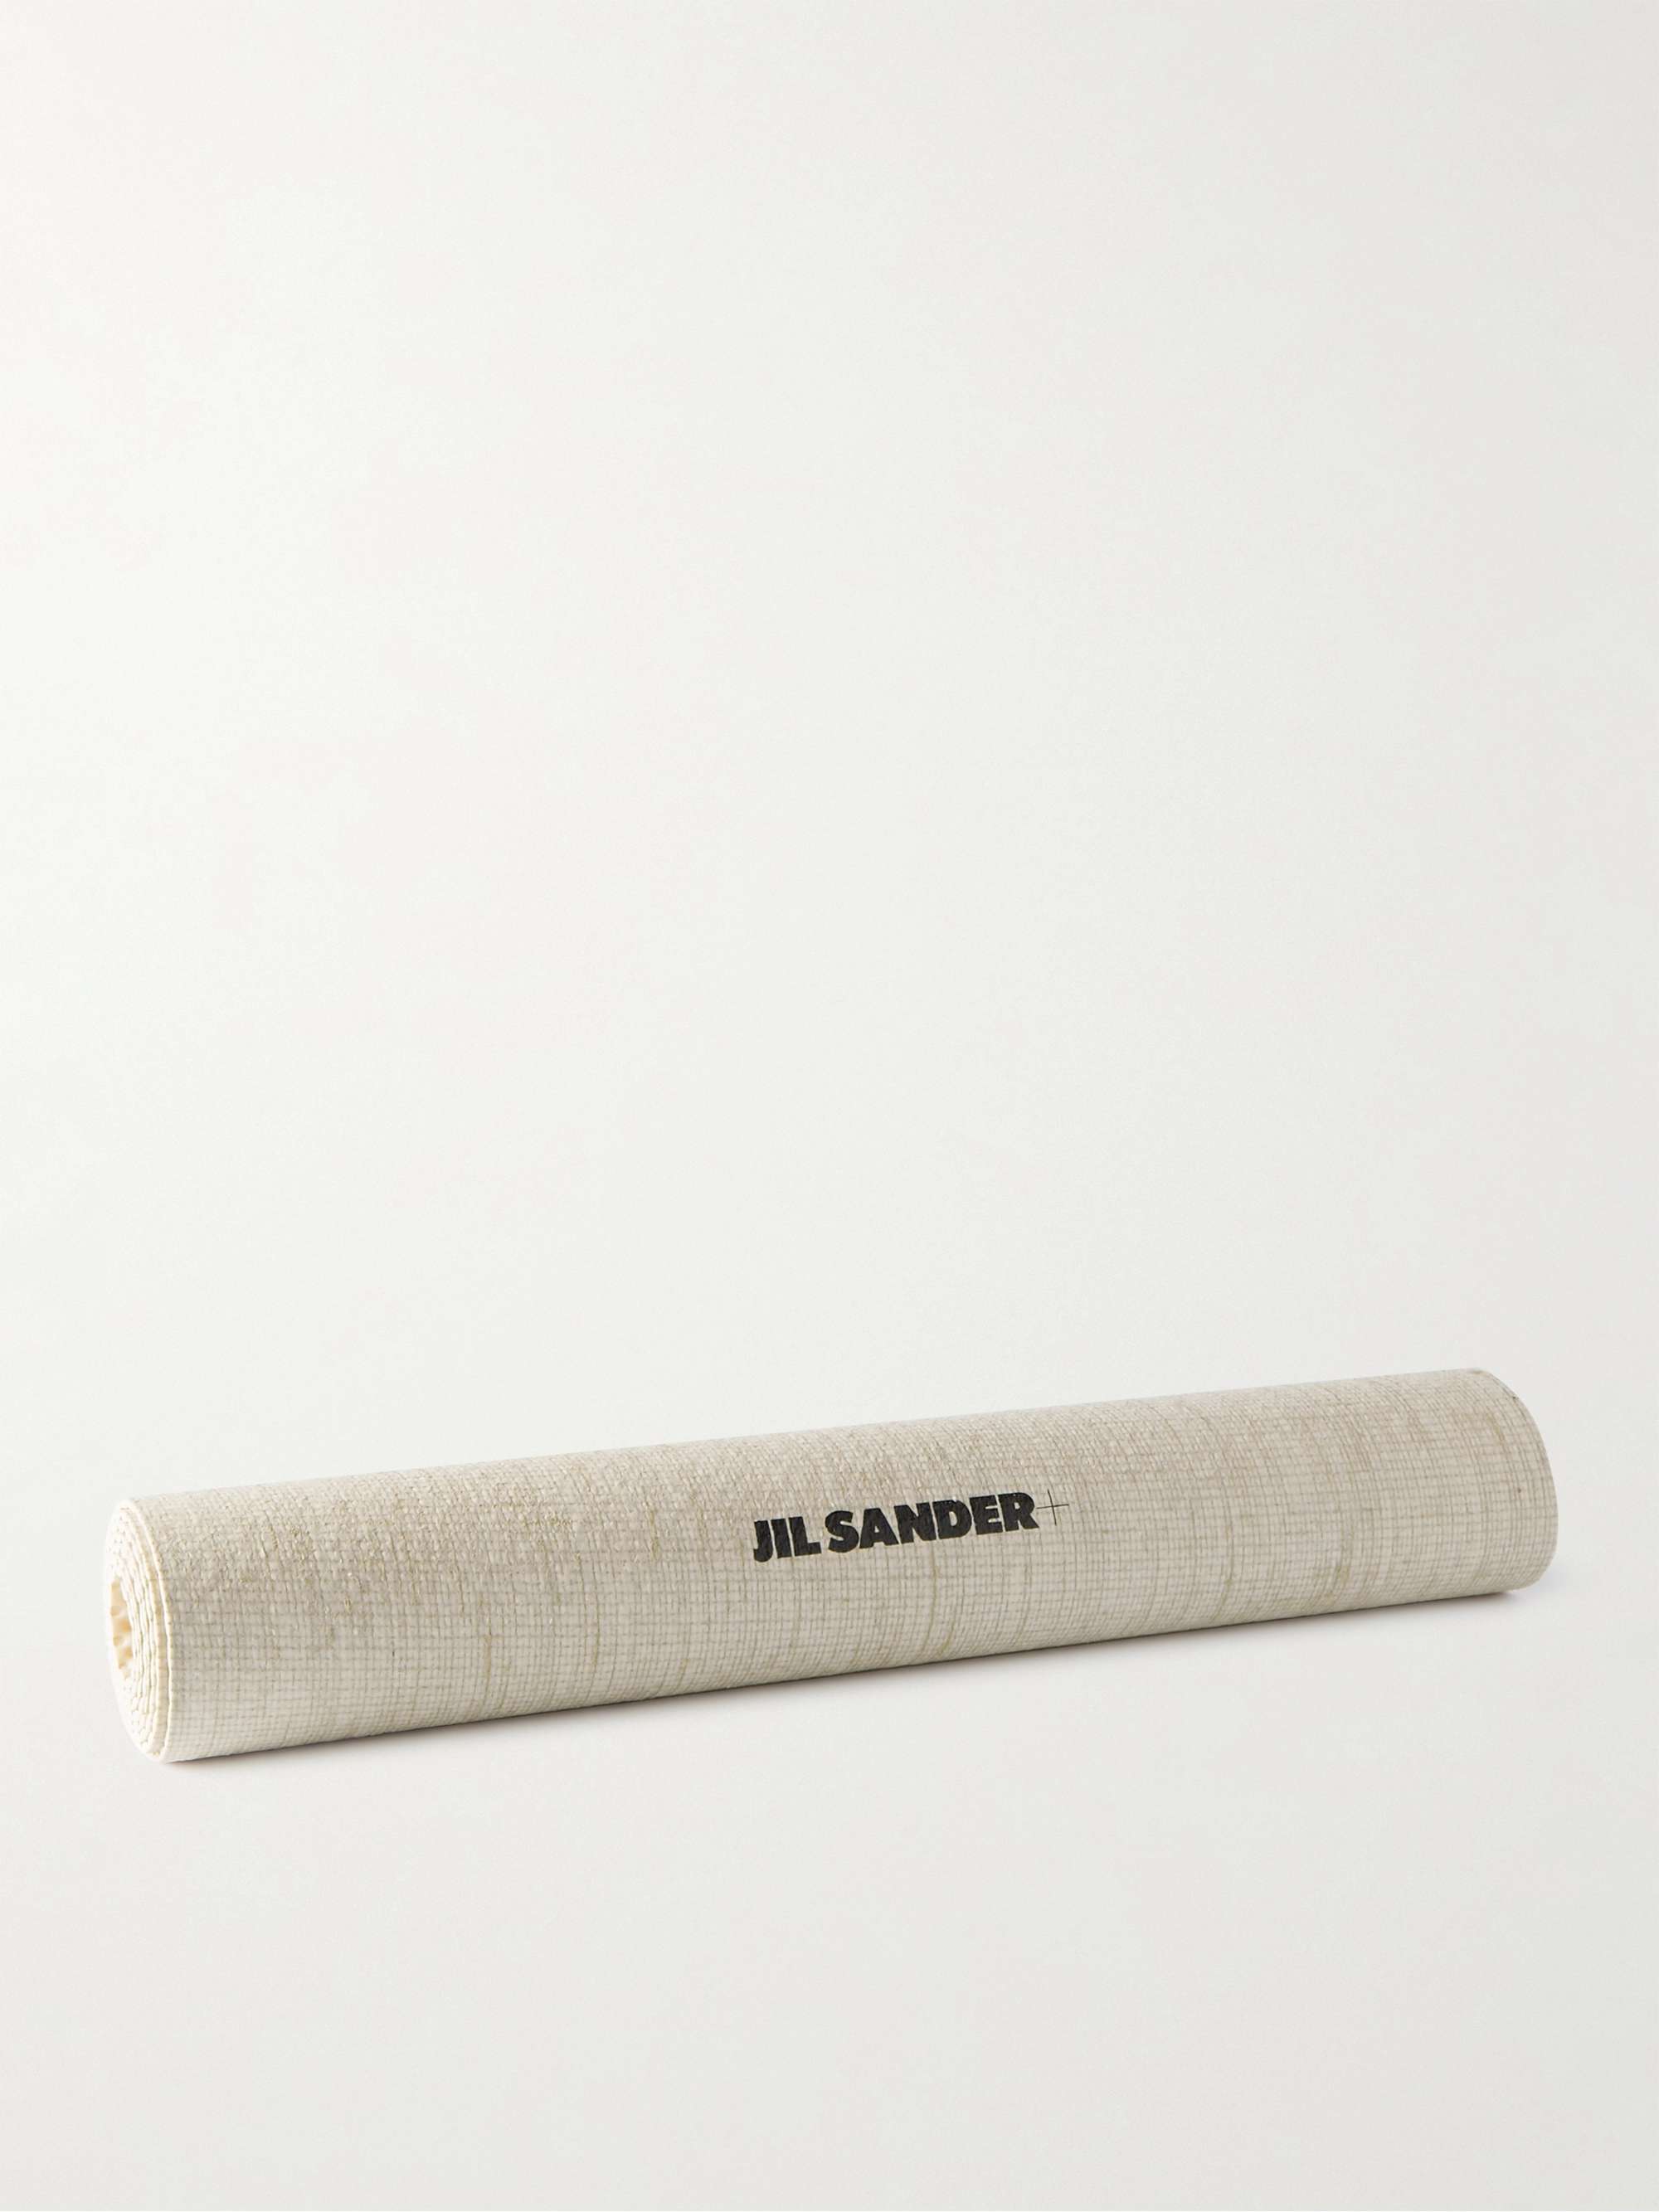 JIL SANDER Logo-Print Jute-Blend Yoga Mat